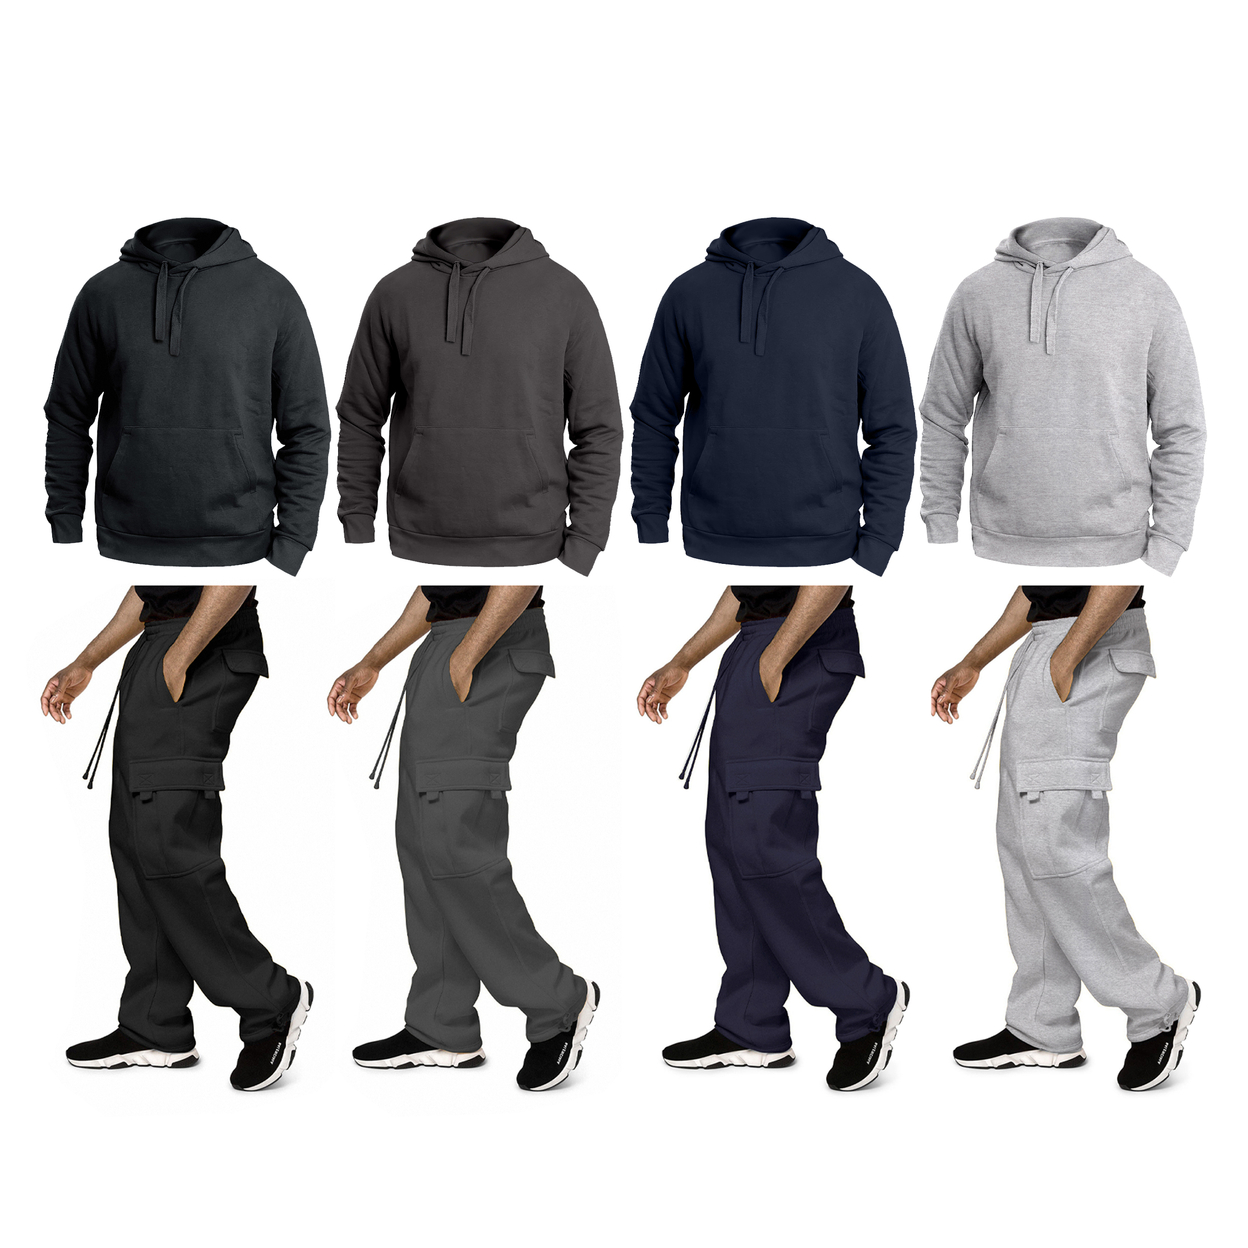 Multi-Pack: Big & Tall Men's Winter Warm Cozy Athletic Fleece Lined Multi-Pocket Cargo Sweatsuit - Black, 2-pack, X-large